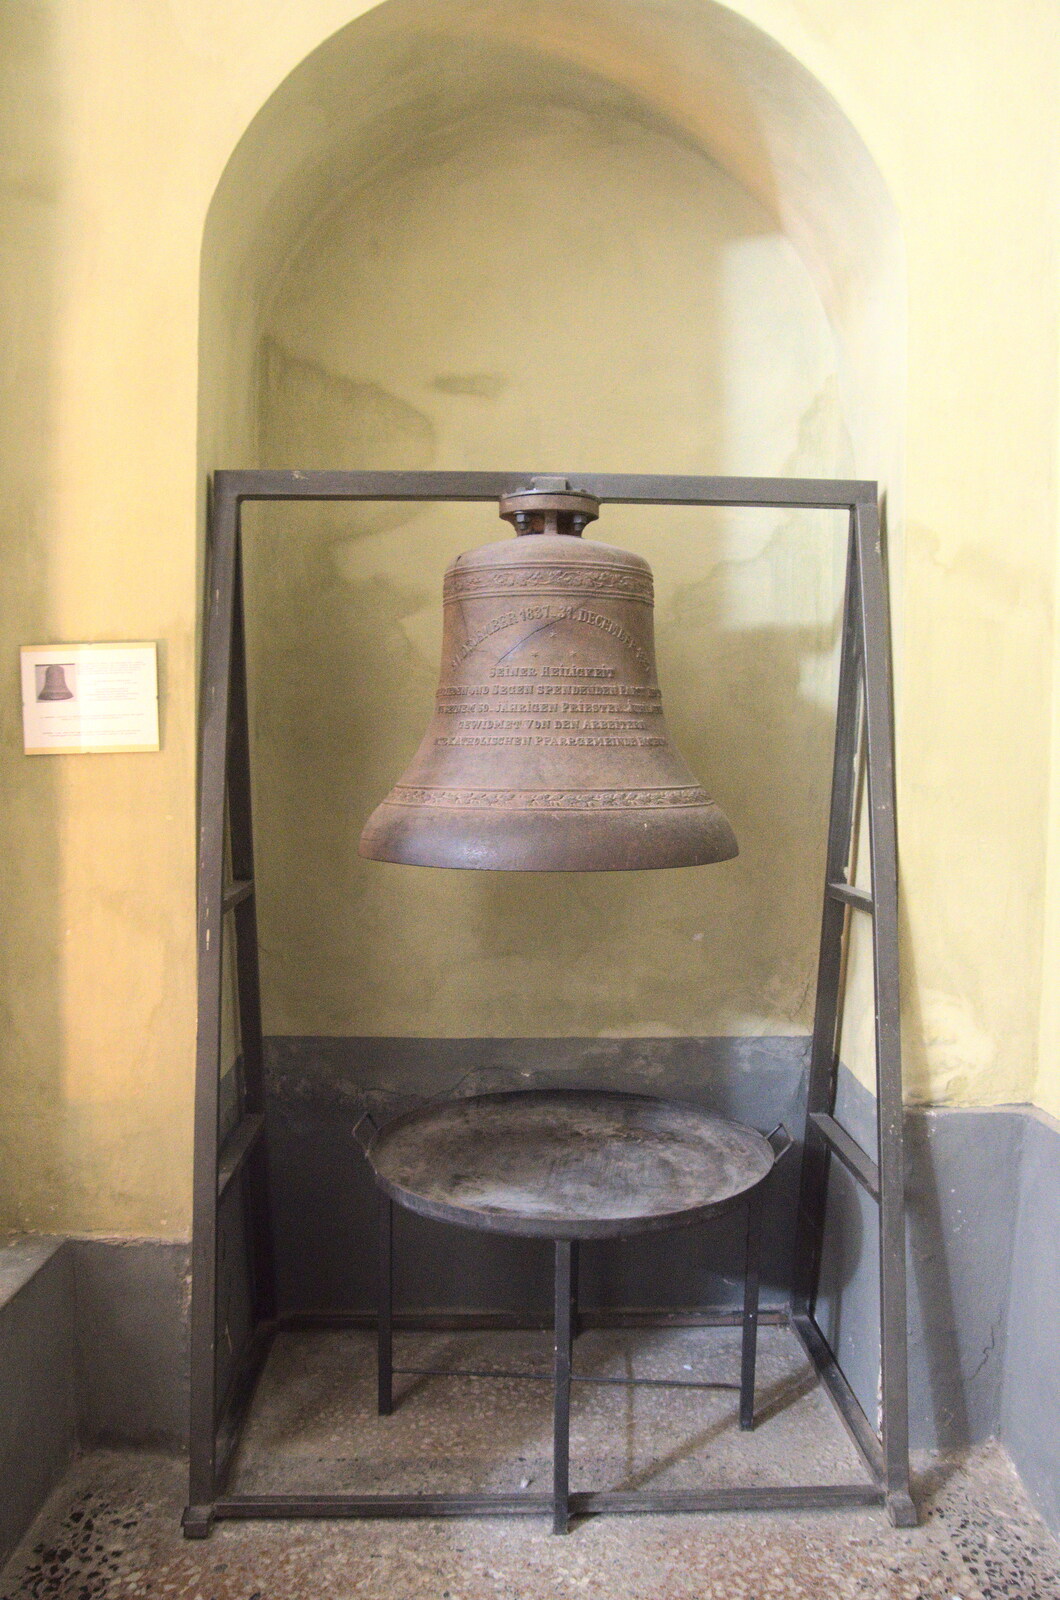 Castiglio Del Lago and Santuario della Verna, Umbria and Tuscany, Italy - 1st September 2022: An old church bell